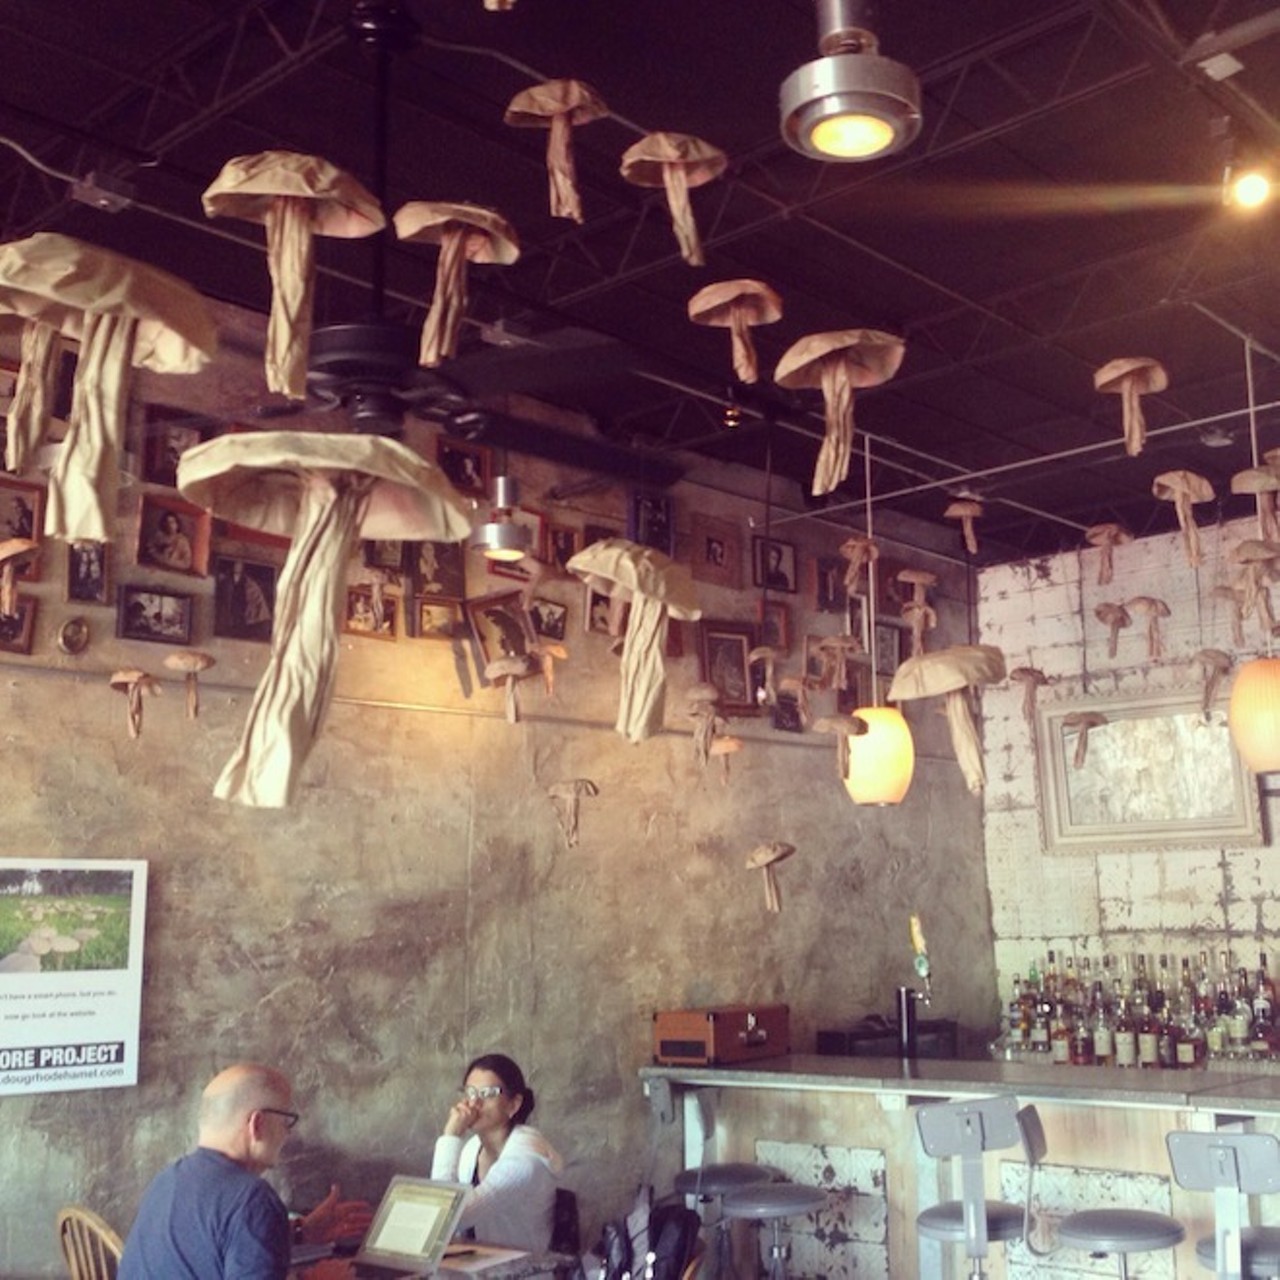 Paper-bag mushrooms hang at Stardust as part of Doug Rhodehamel's #sporeproject